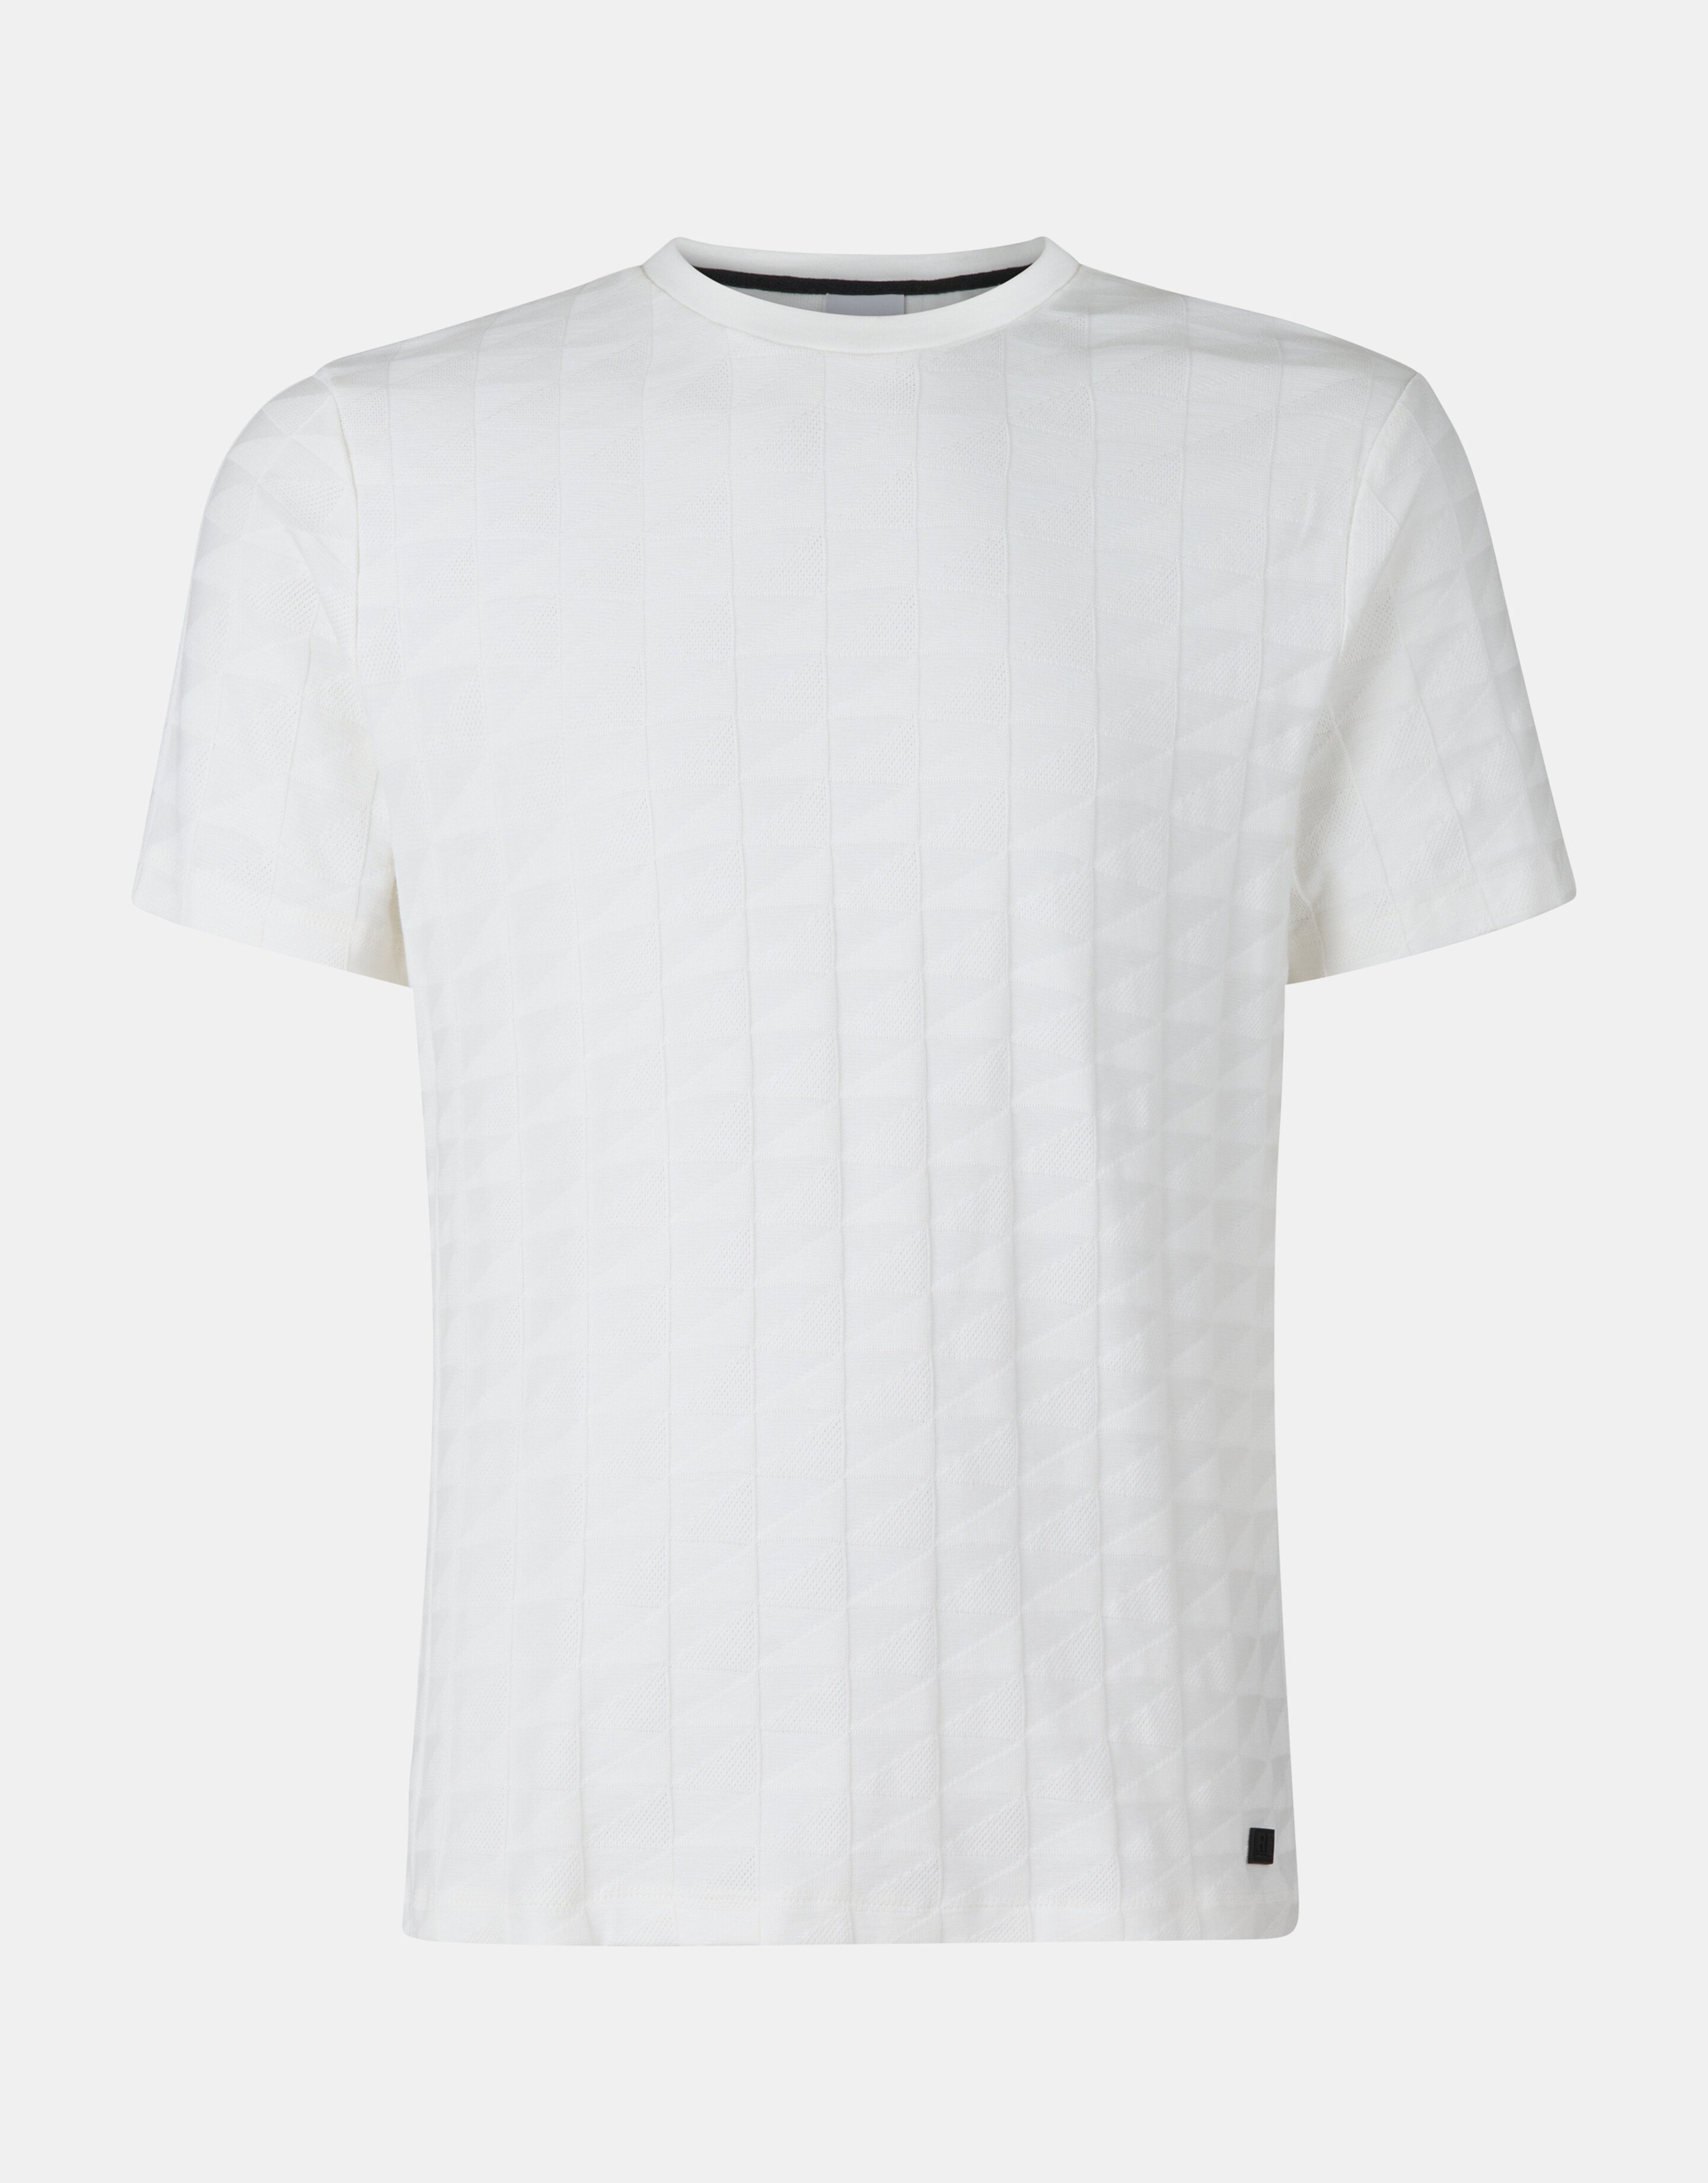 Jacquard T-Shirt REFILL